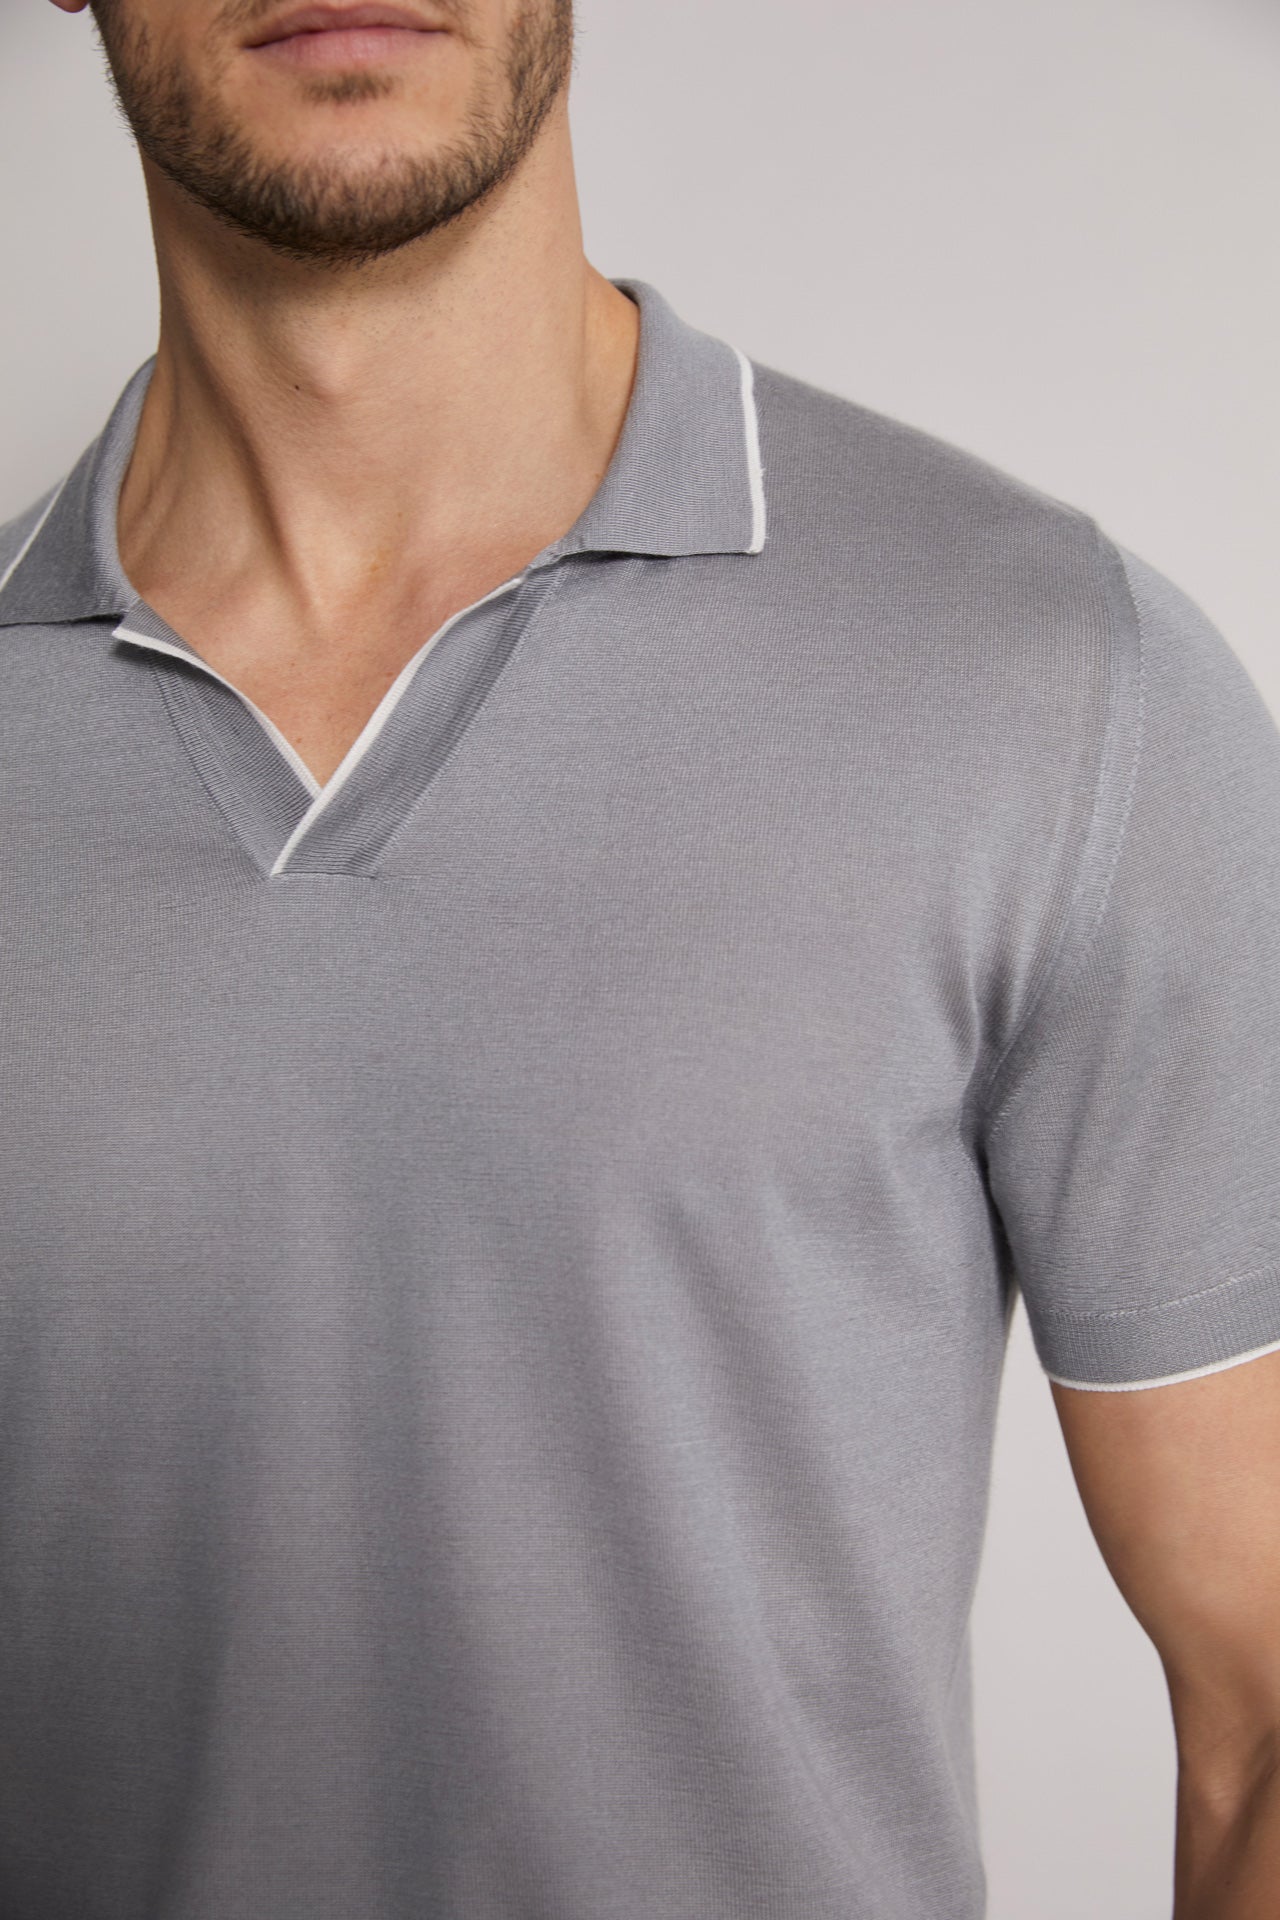 men's buttonless polo v-neck in light grey - collar detail